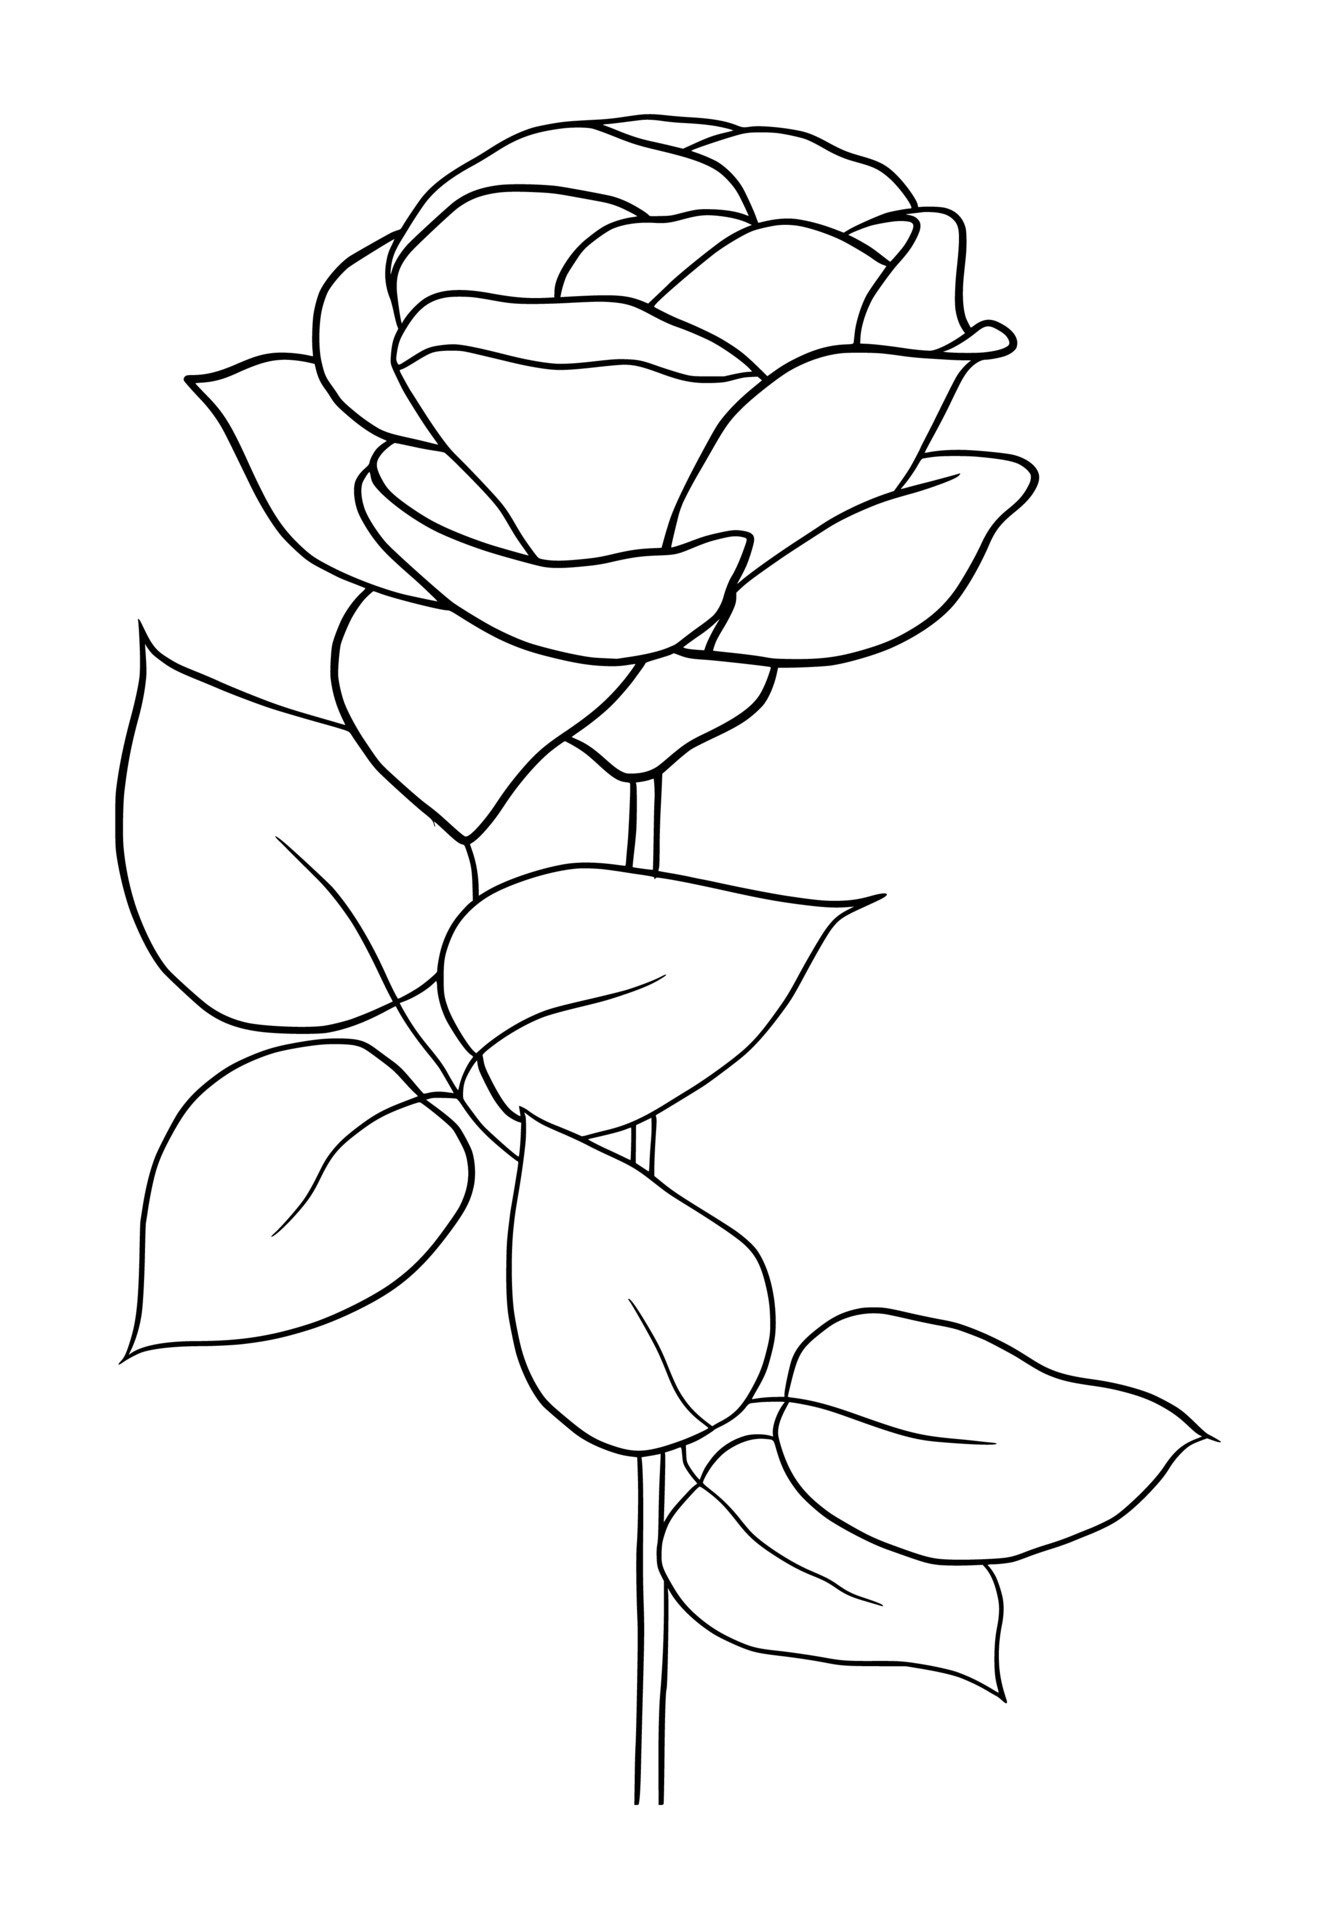 outline rose isolated on white background. vector illustartion 22662240 ...